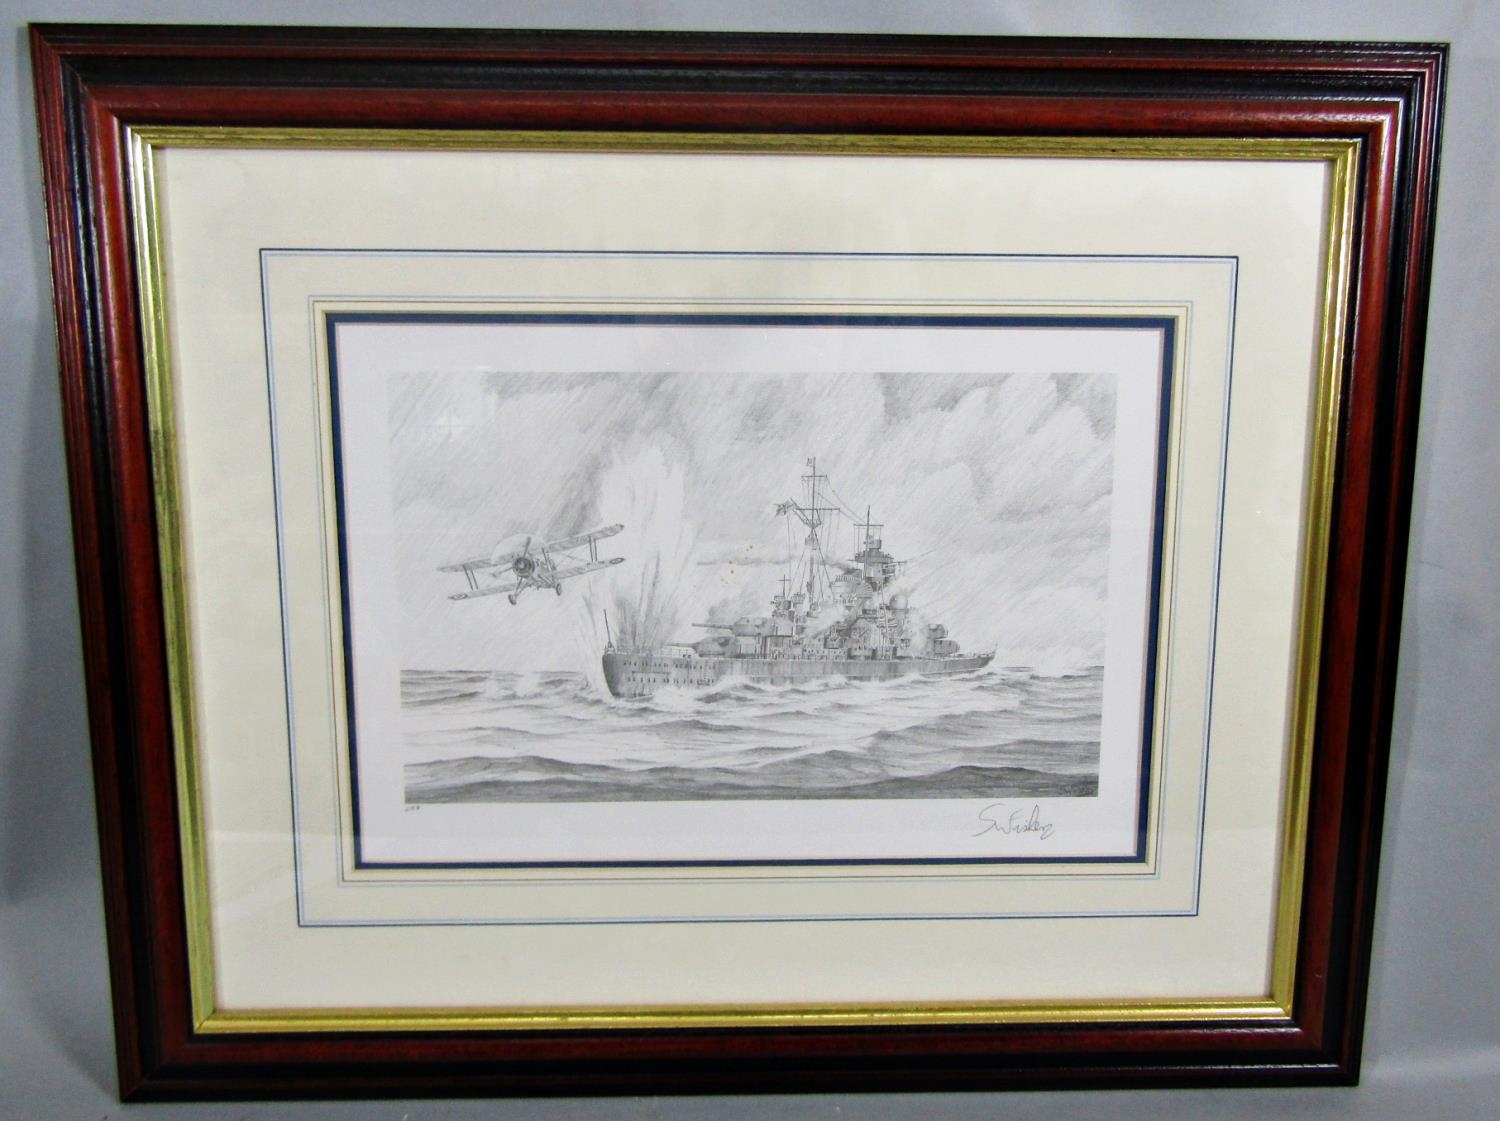 Simon W Fisher (20th century British school) - Bismarck, The Fateful Salvo, 1941, signed limited - Image 2 of 4